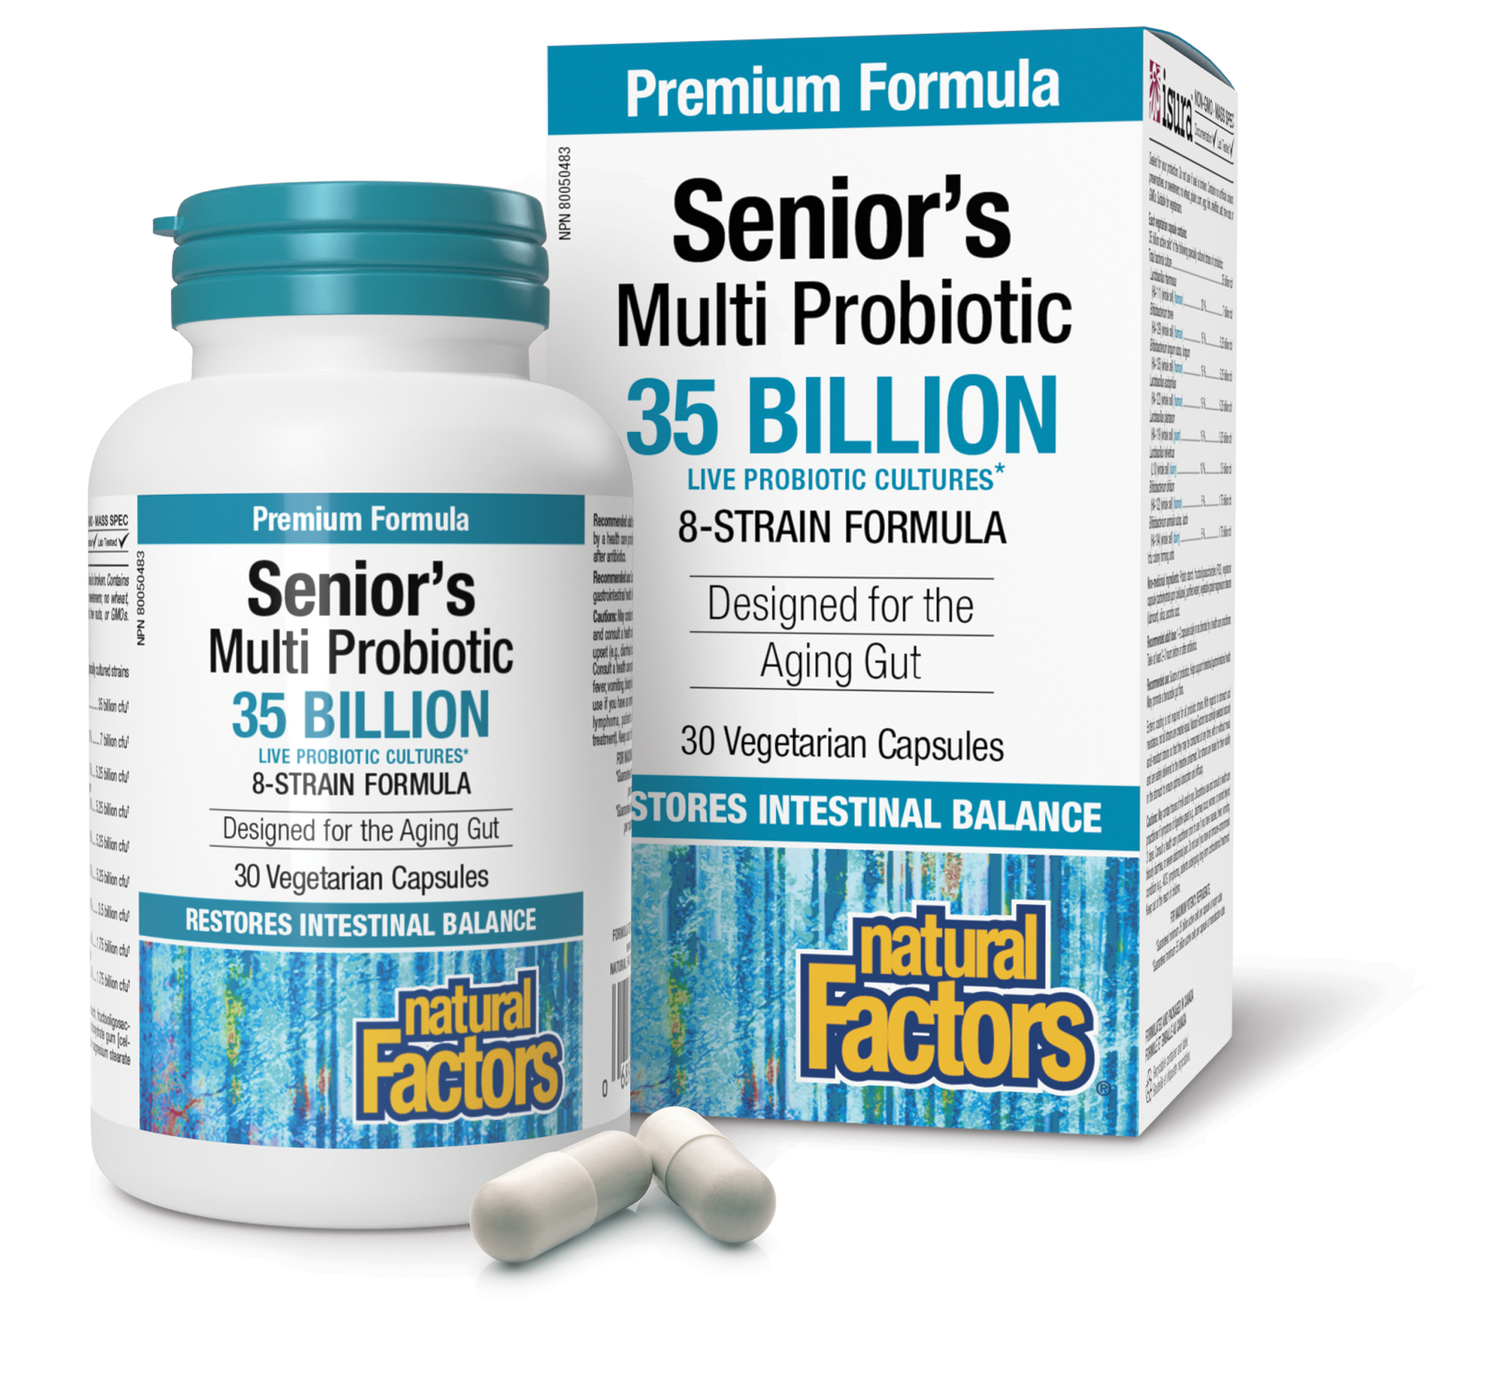 Senior’s Multi Probiotic 35 Billion Live Probiotic Cultures, Natural Factors|v|image|1814